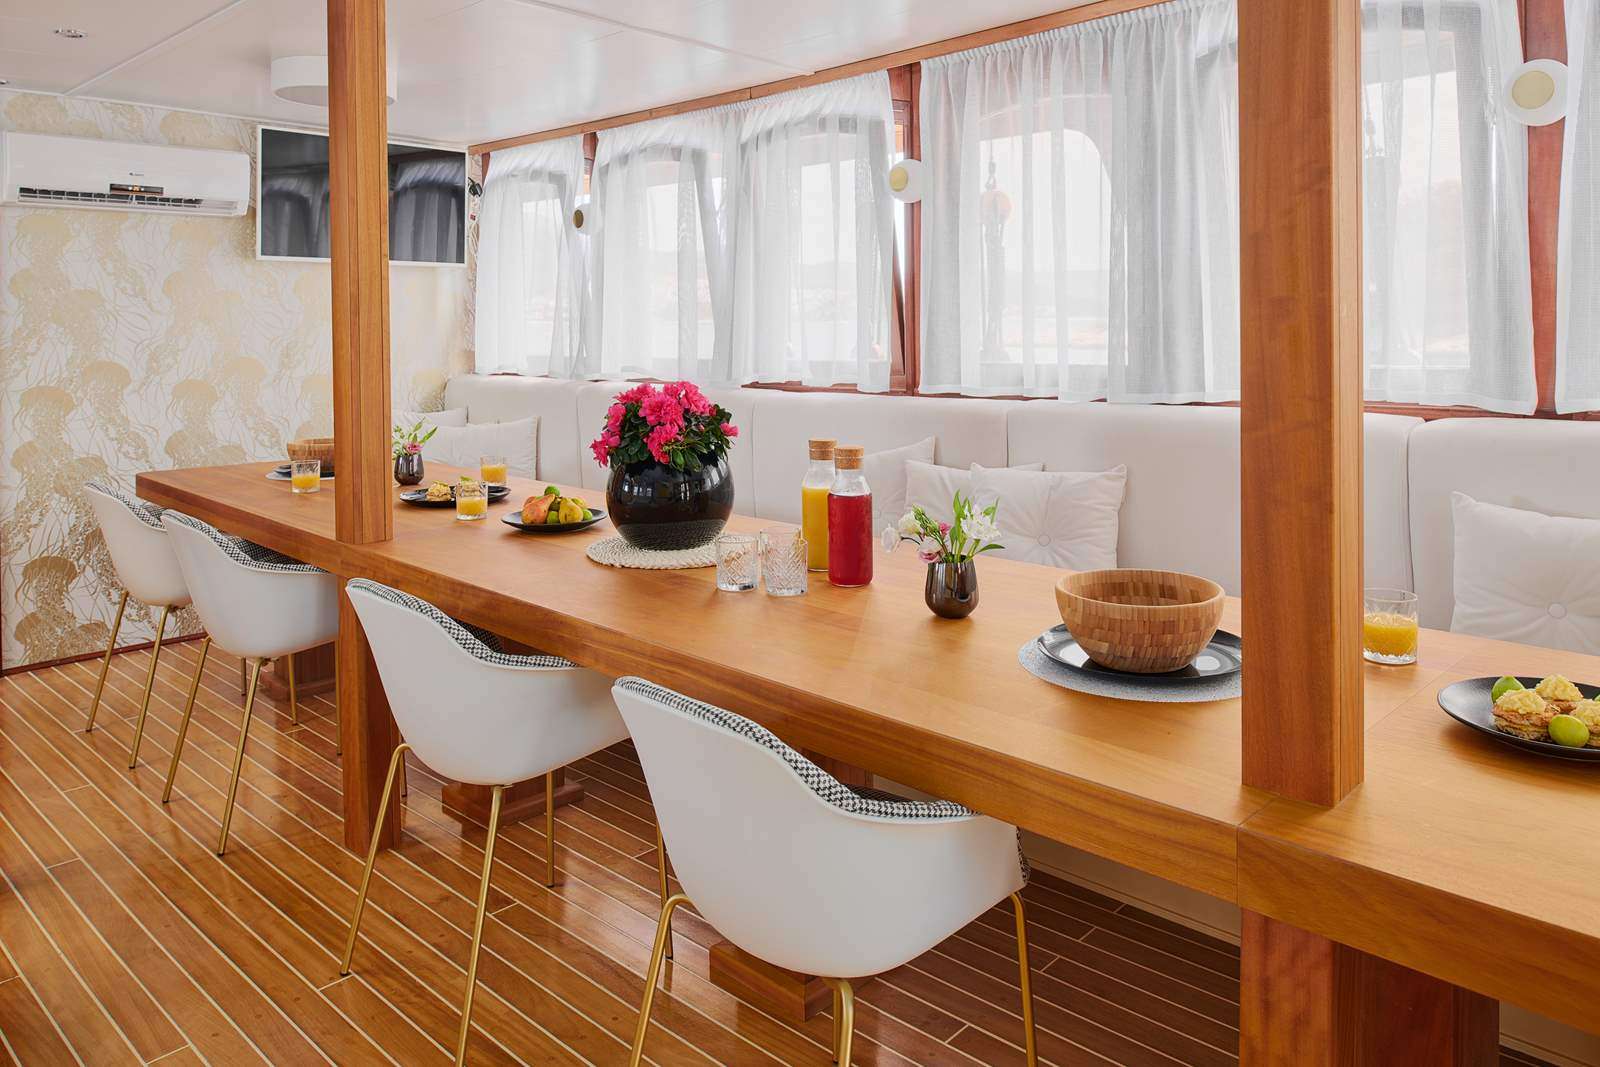 Sailing Yacht 'CATALEYA', 21 PAX, 98.00 Ft, 30.00 Meters, Built 2009, Custom, Refit Year 2019